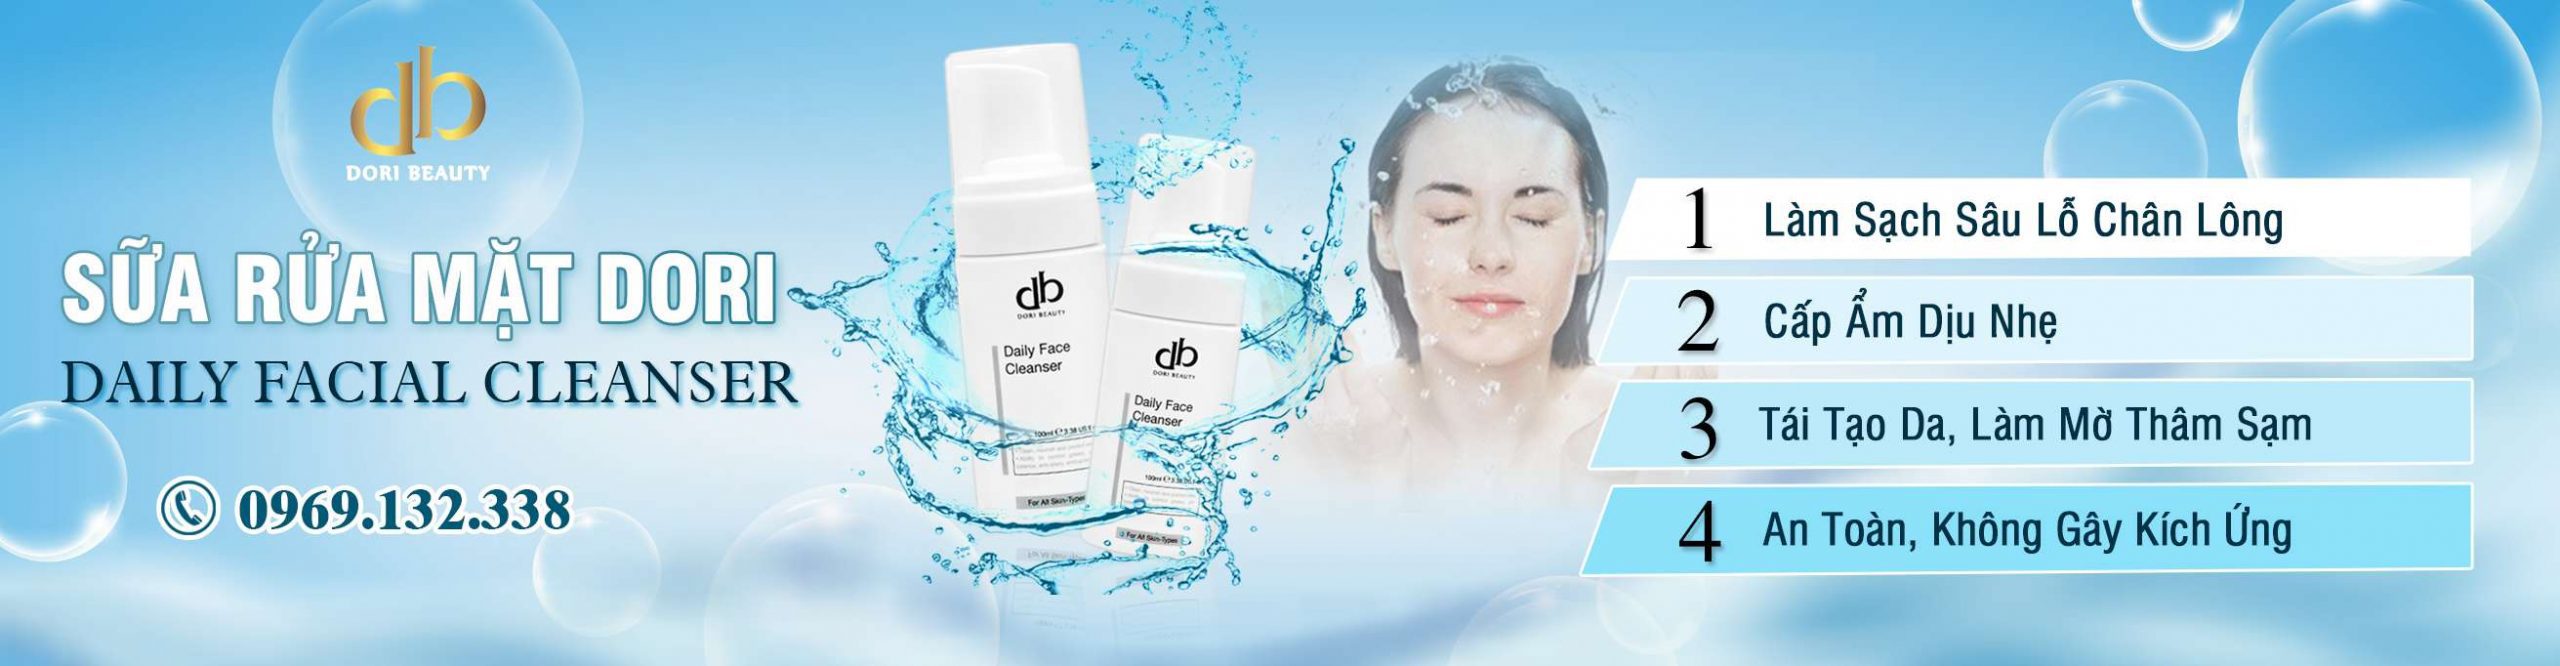 Công dụng sữa rửa mặt DORI (Daily Facial Cleanser)